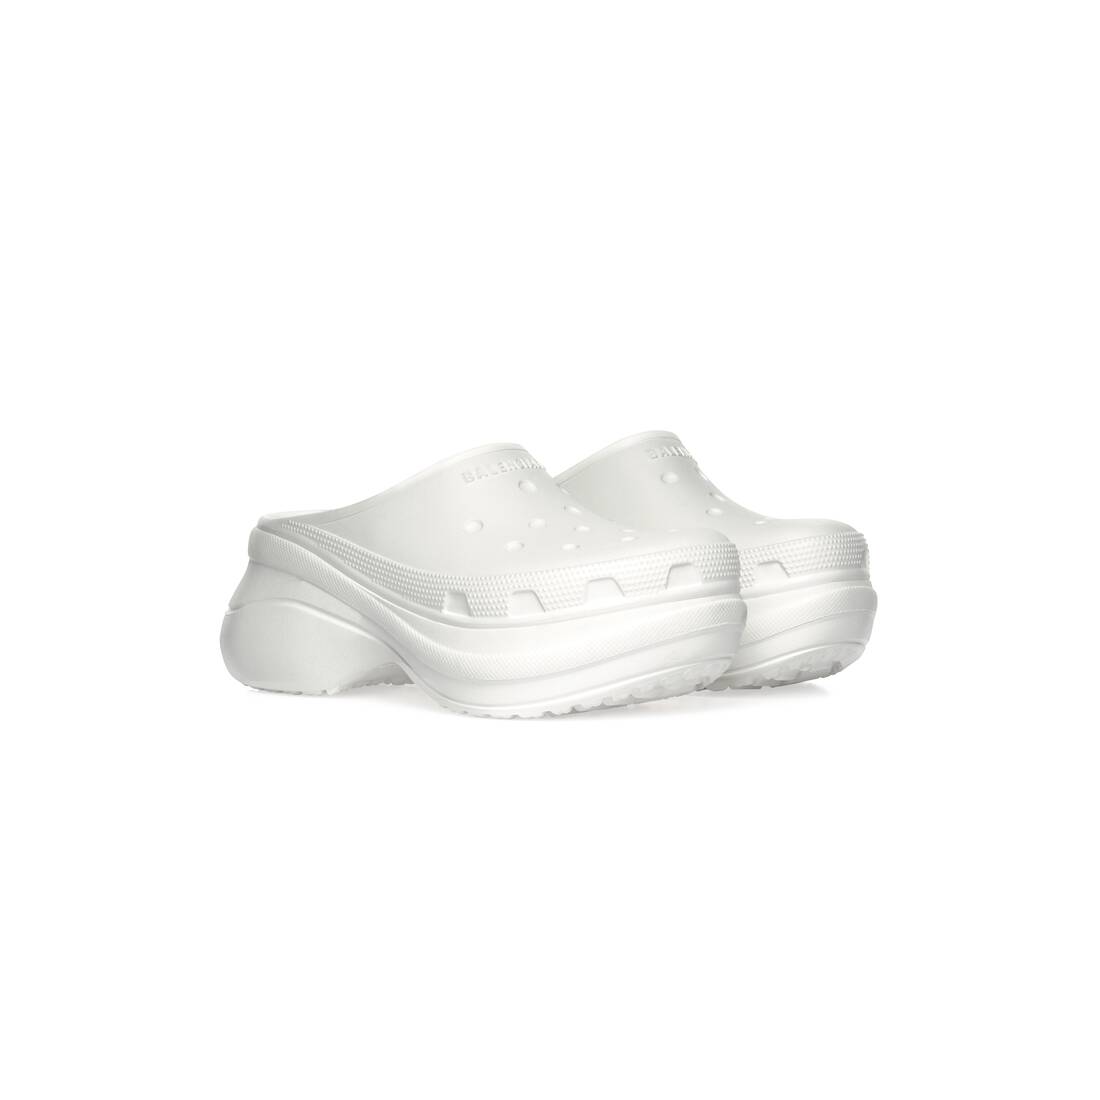 Balenciaga x Crocs Boot White Womens  677388W1S8E9000  US